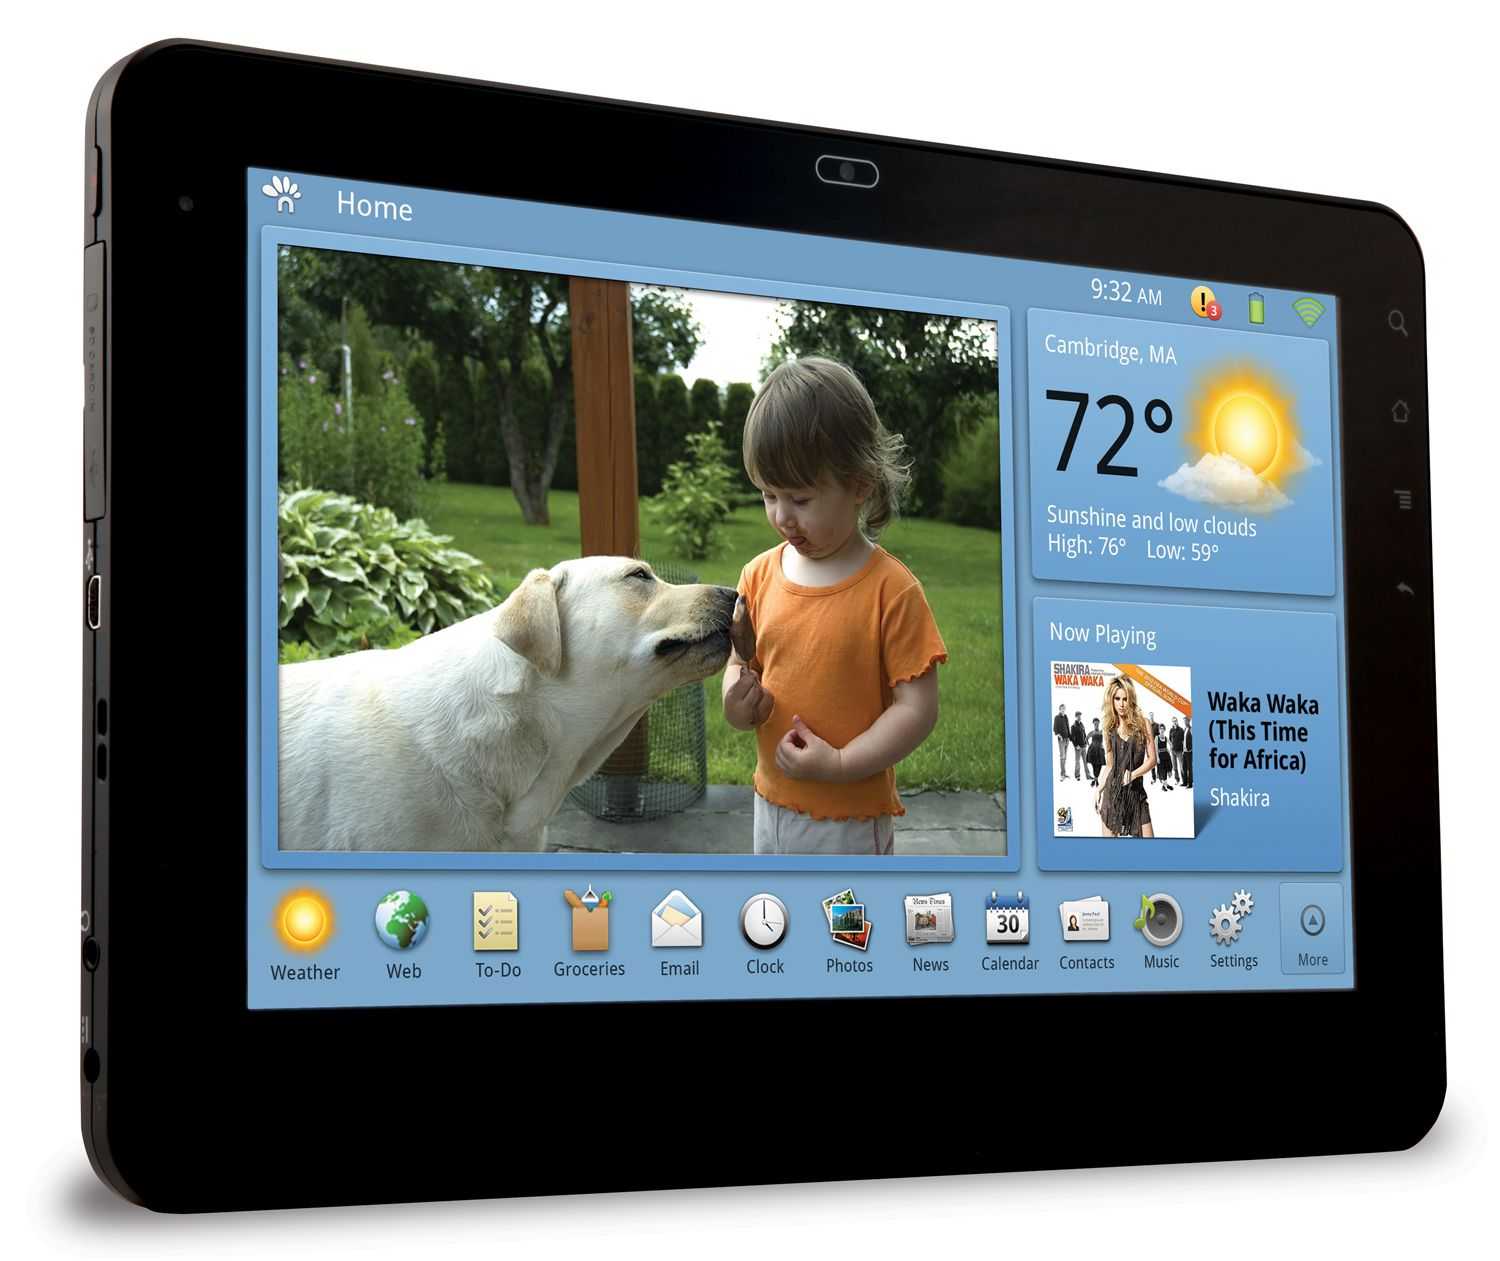 Замена экрана планшета viewsonic viewpad 7 — купить, цена и характеристики, отзывы